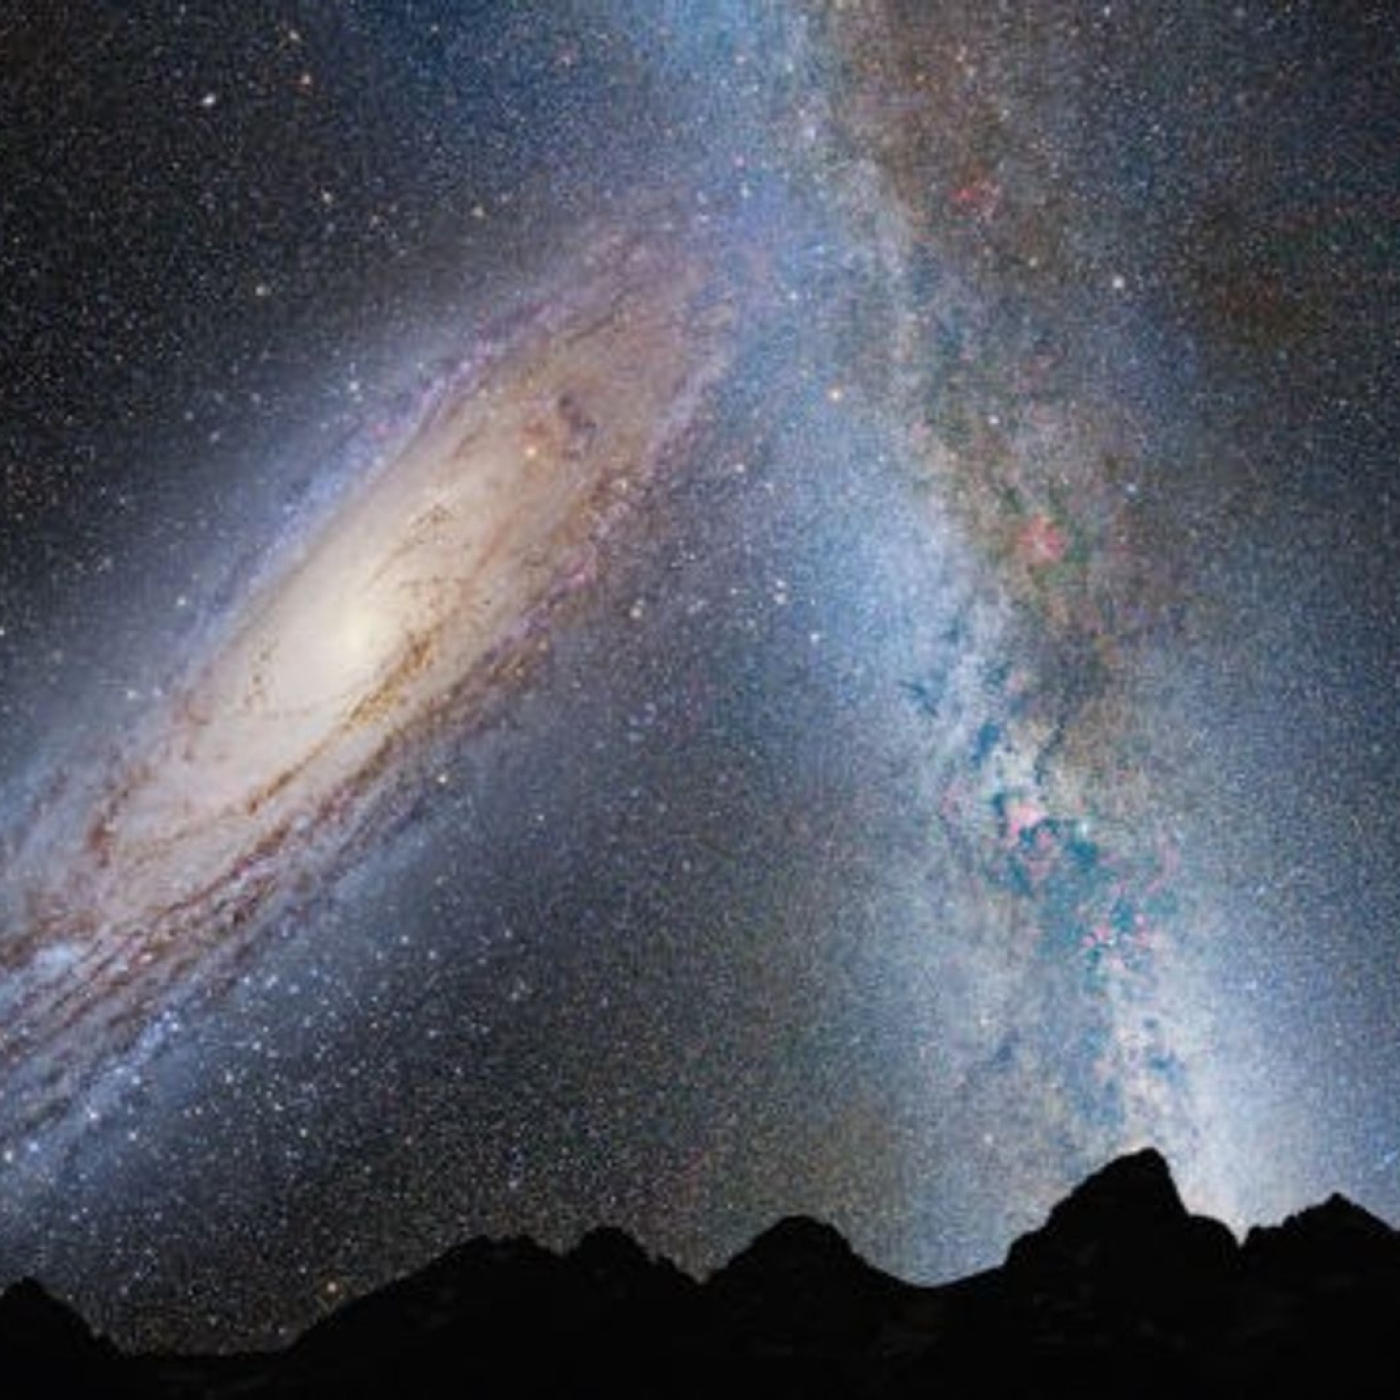 GUERRA DE LAS GALAXIAS #documental #universo #astronomia #podcast